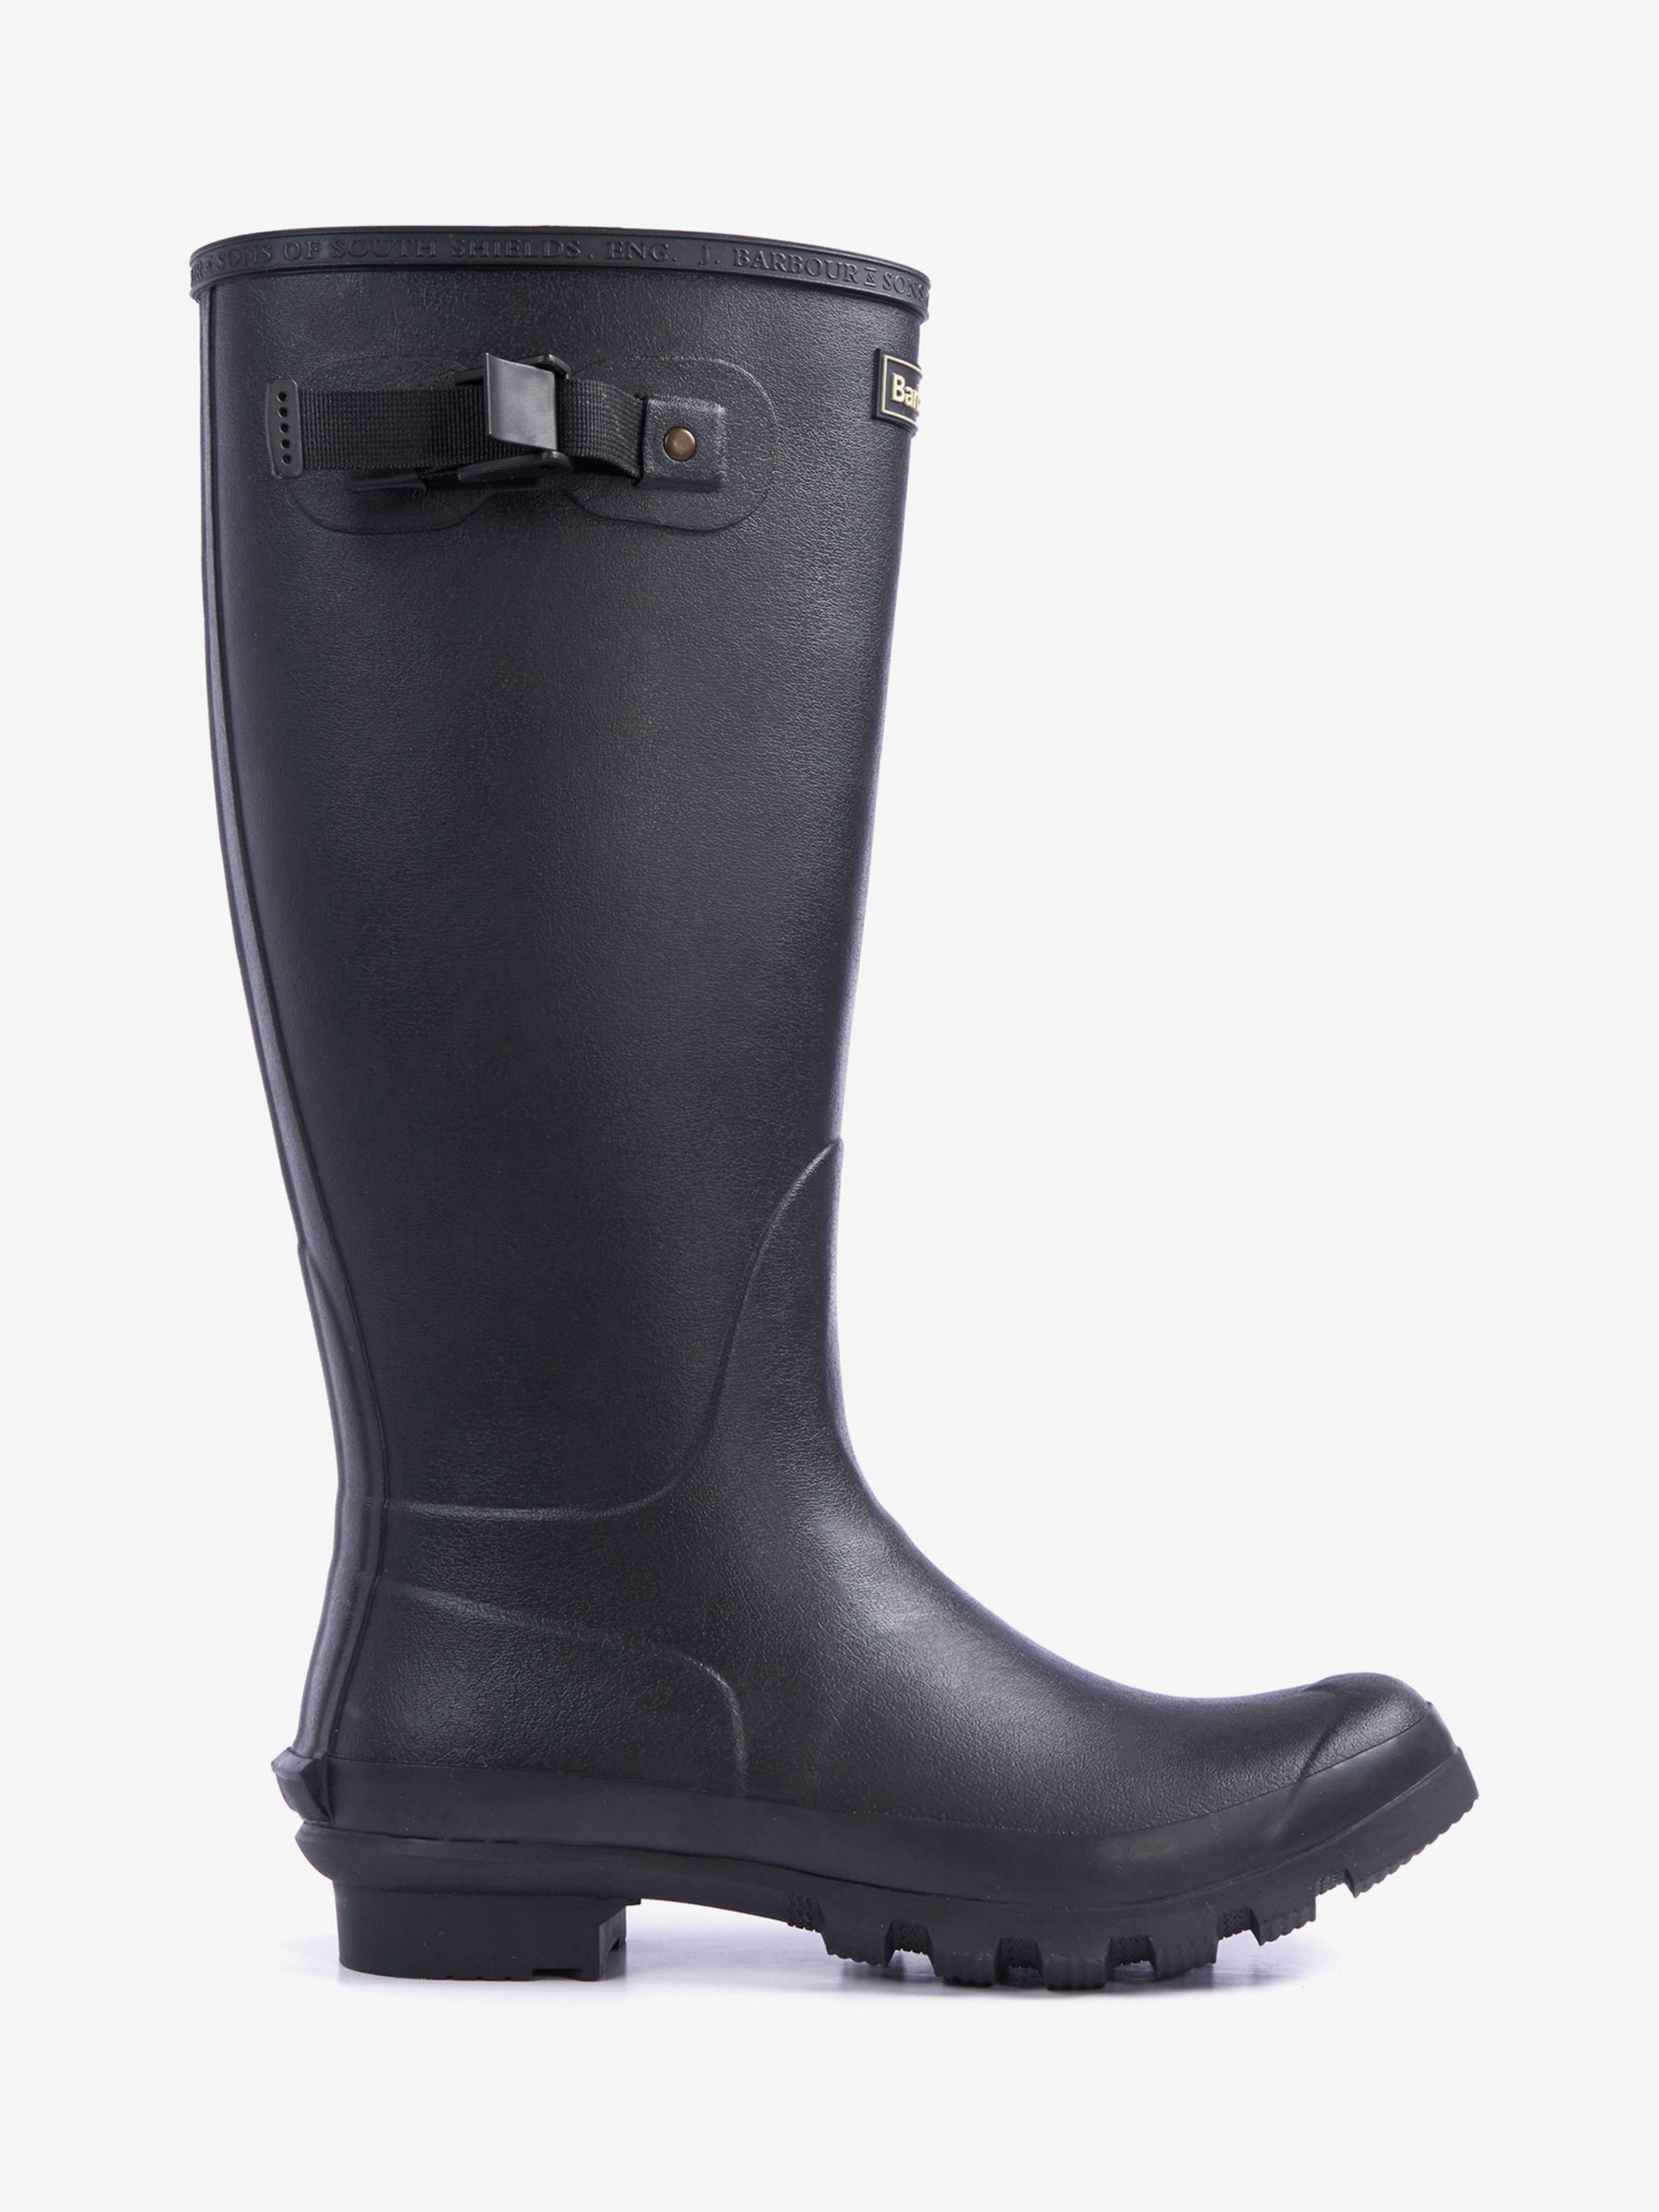 Barbour Bede Waterproof Wellington Boots, Black at John Lewis & Partners